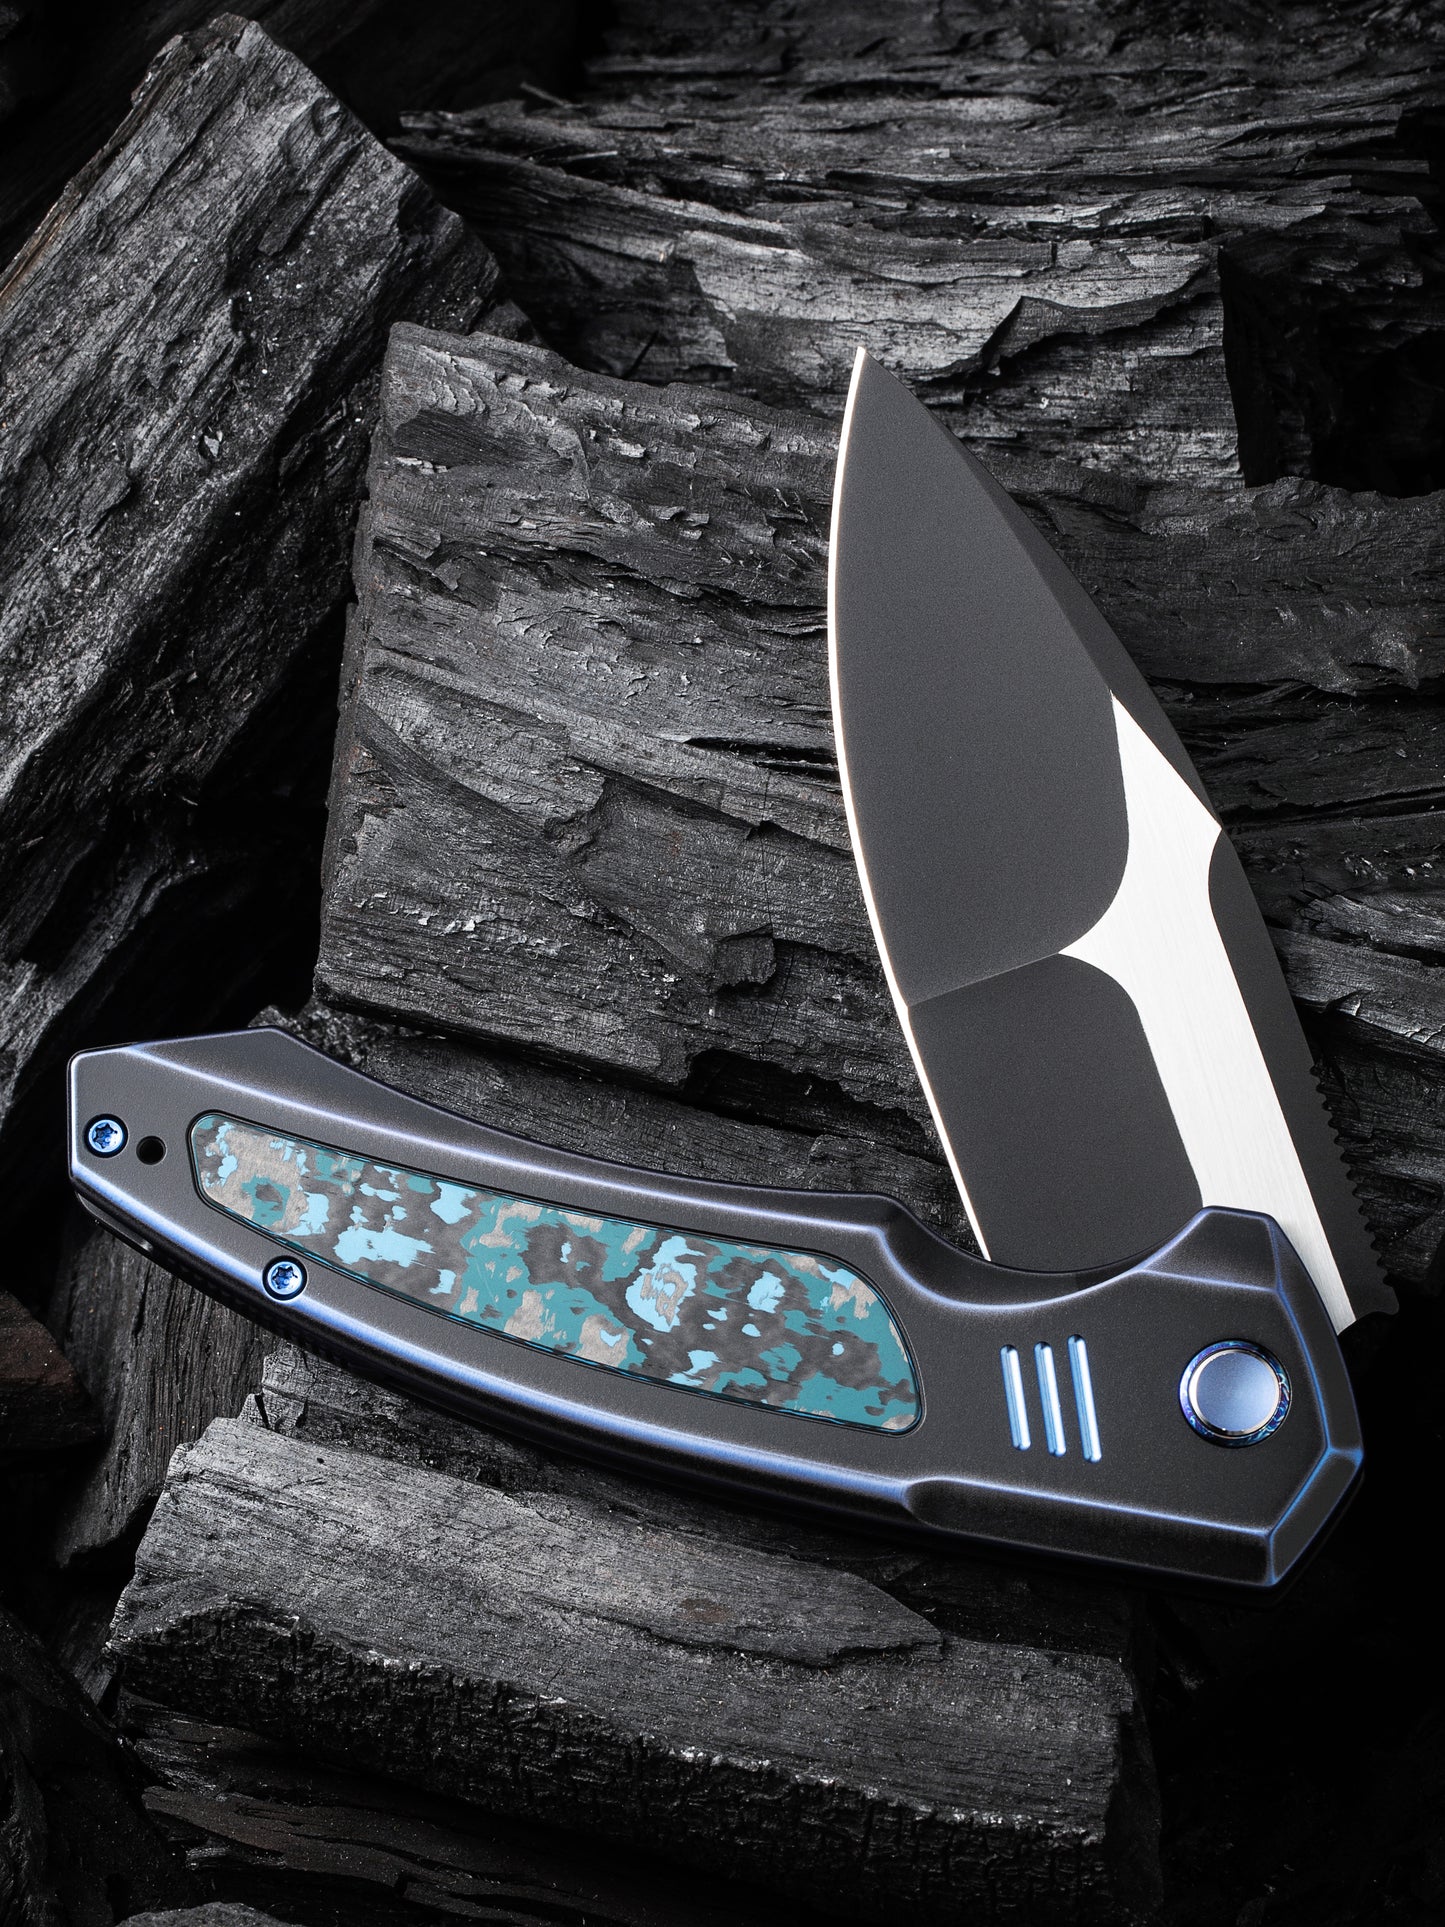 WE Hyperactive 3.8" Vanax Blue/Black Arctic Storm Fat Carbon Fiber Titanium Folding Knife WE23030-3